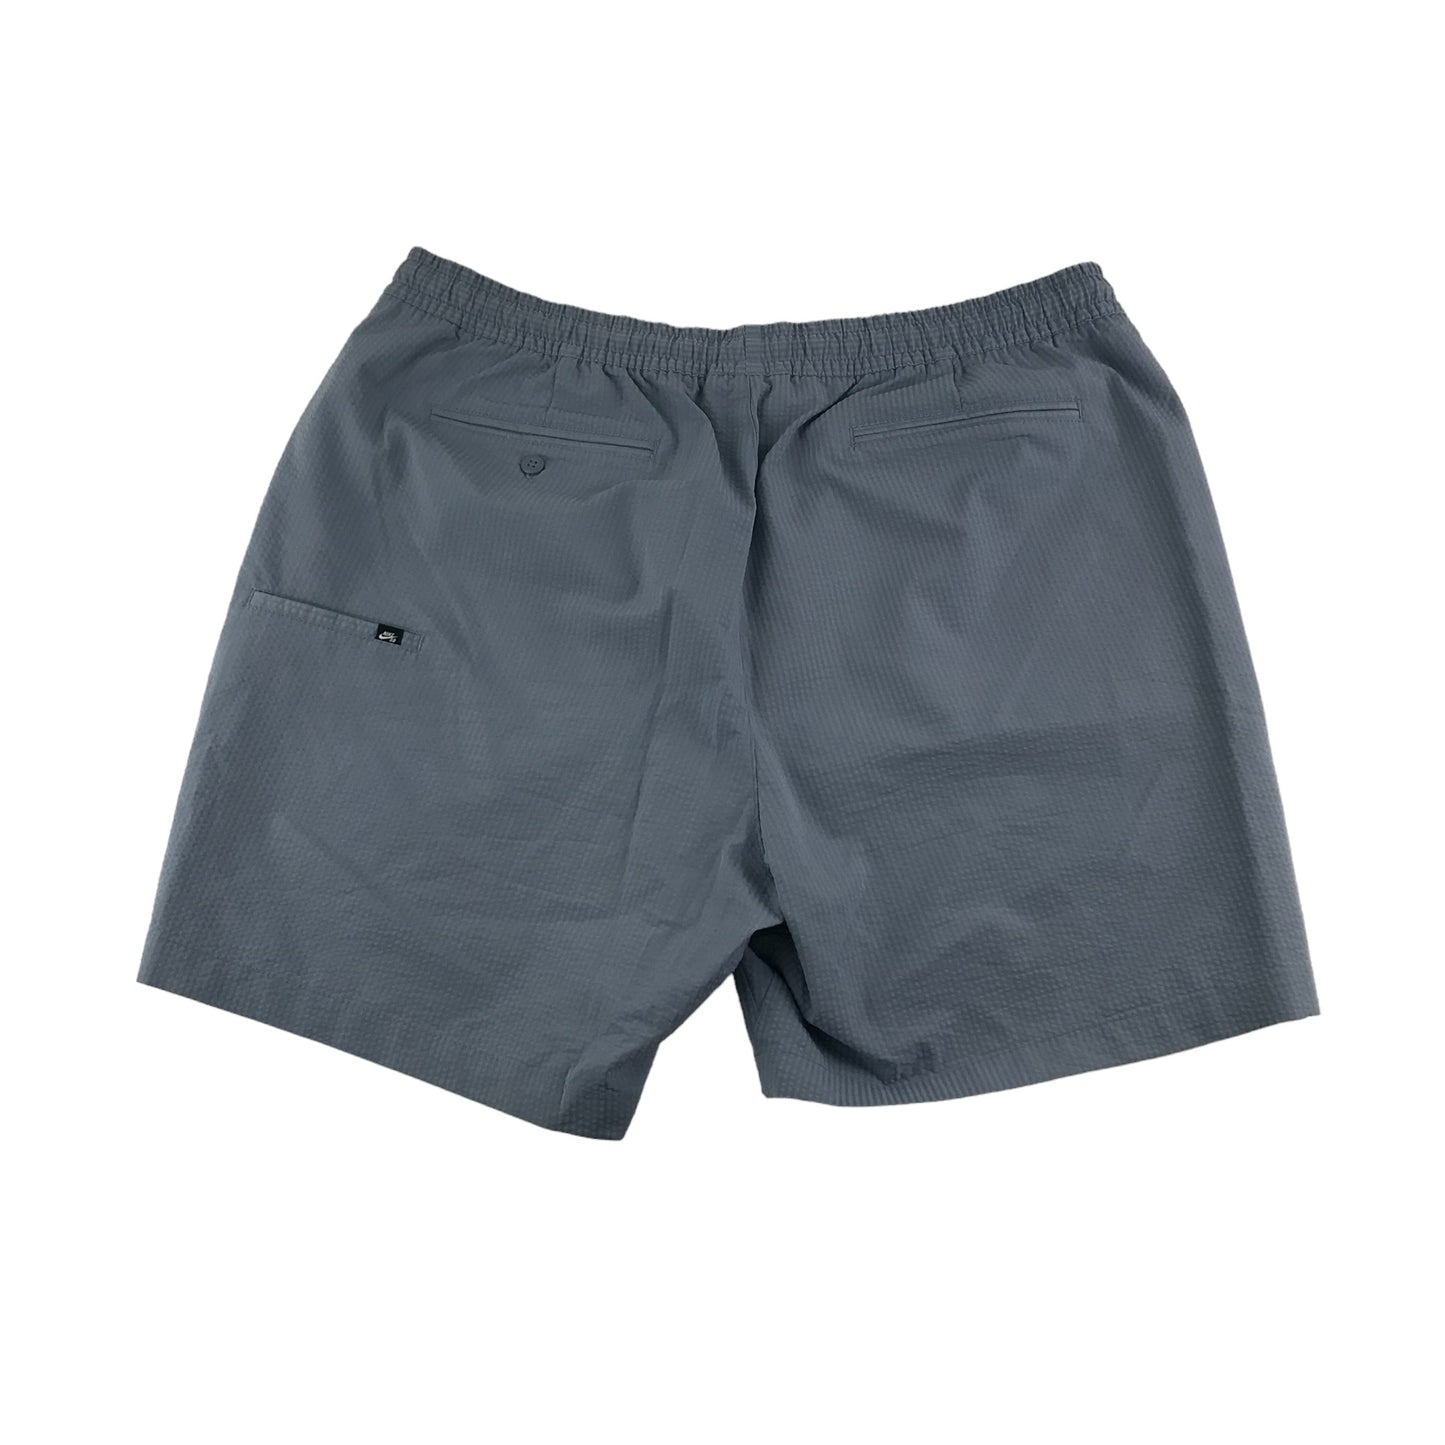 Nike Sport Shorts Size XL Grey Elasticated Waistband